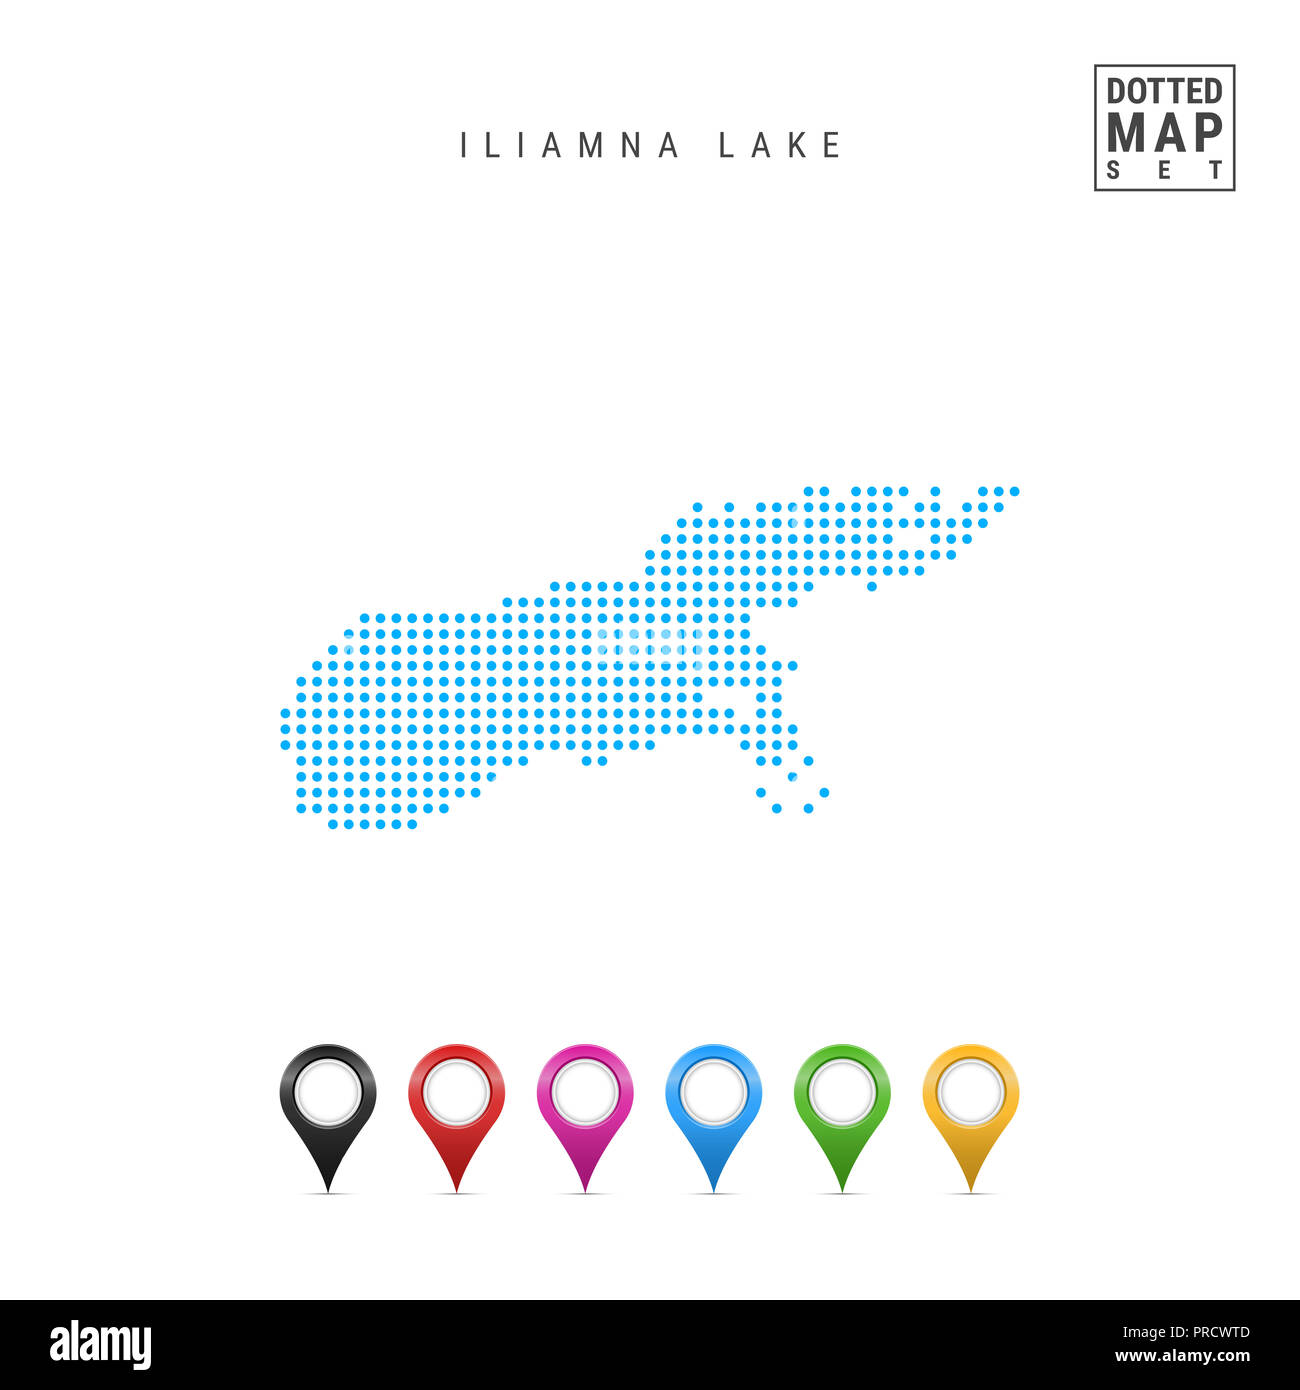 Dots Pattern Map of Iliamna Lake, Alaska. Stylized Simple Silhouette of Iliamna Lake. Set of Multicolored Map Markers. Illustration Isolated on White  Stock Photo